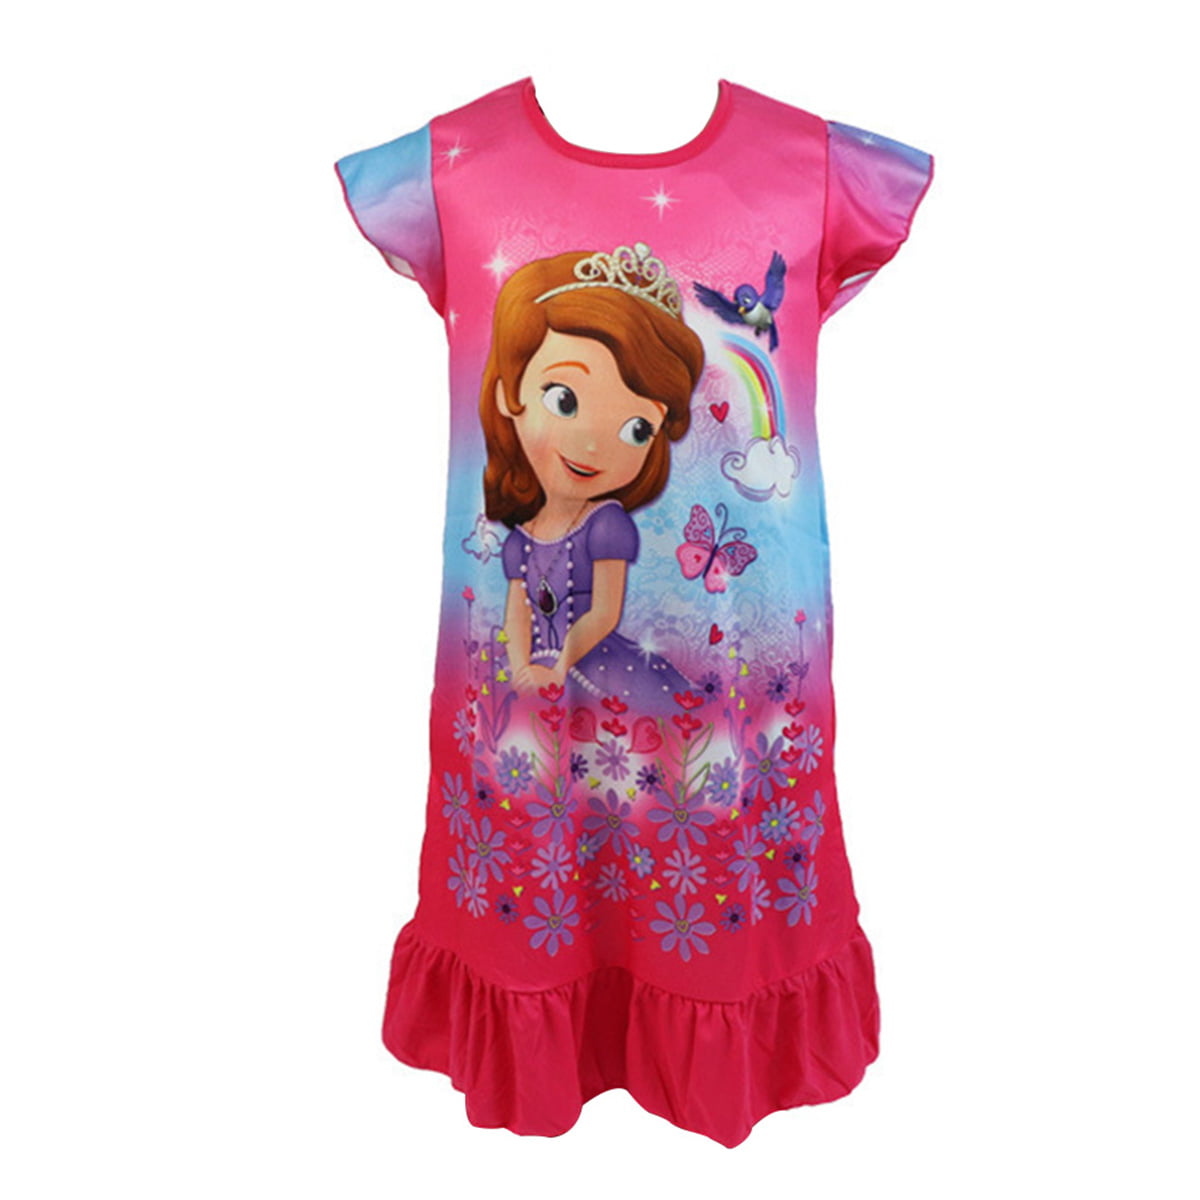 JCHEGN Princess Nightgown Kids Nightdress Girl Cartoon Pajamas Toddler Short Sleeve Sleepwear 